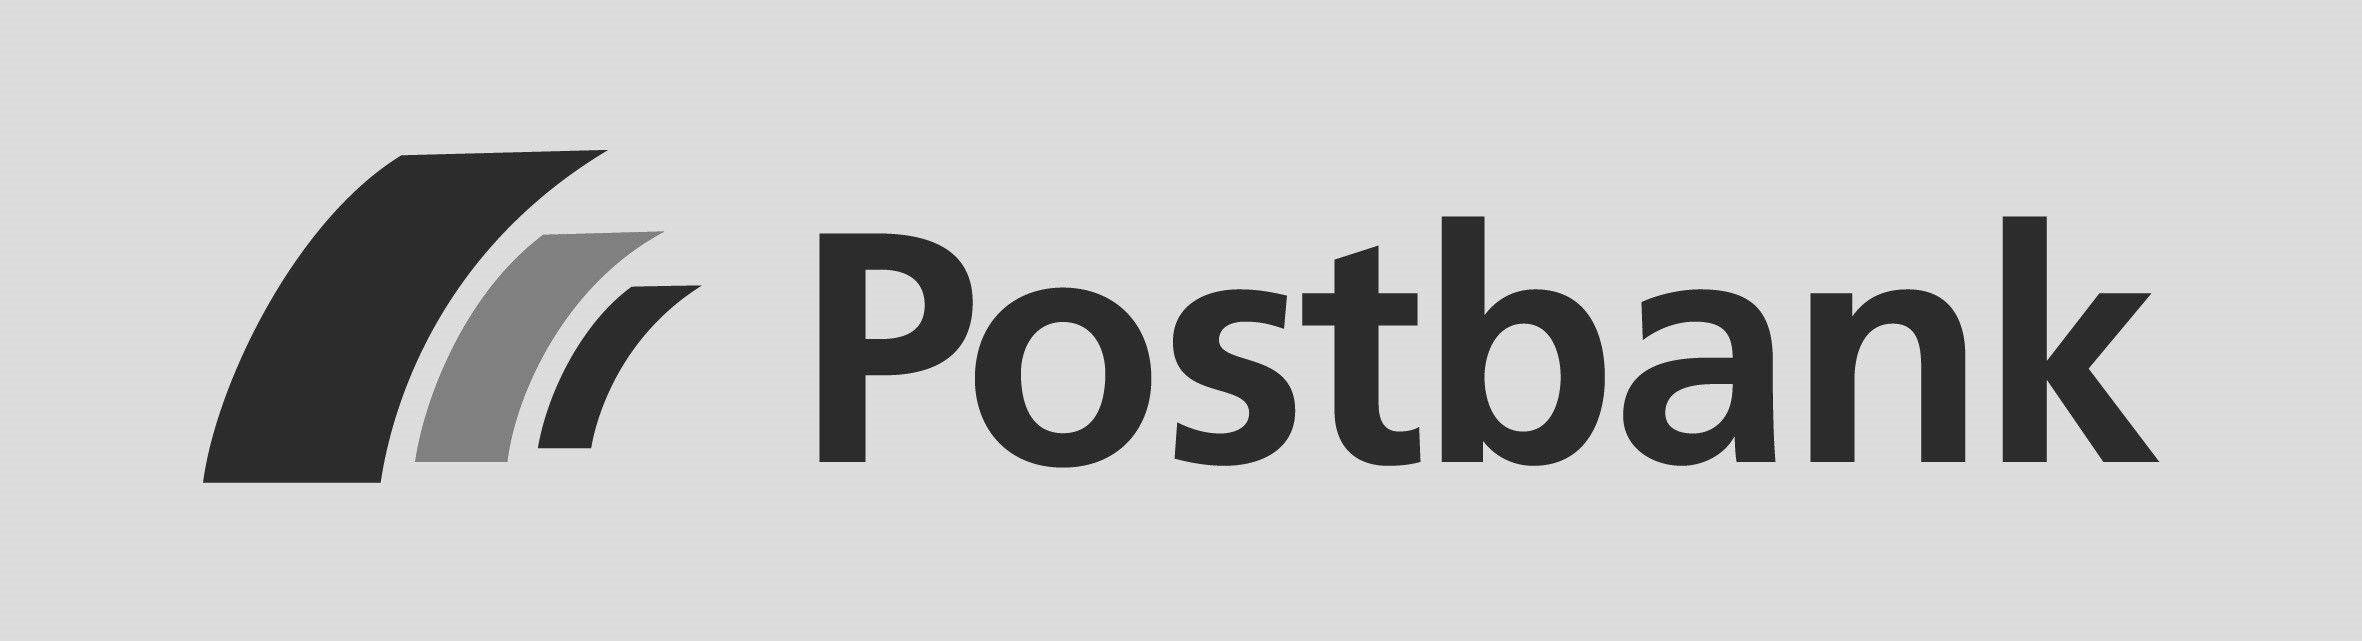 Postbank Logo - postbank logo sw - PIRATE.global